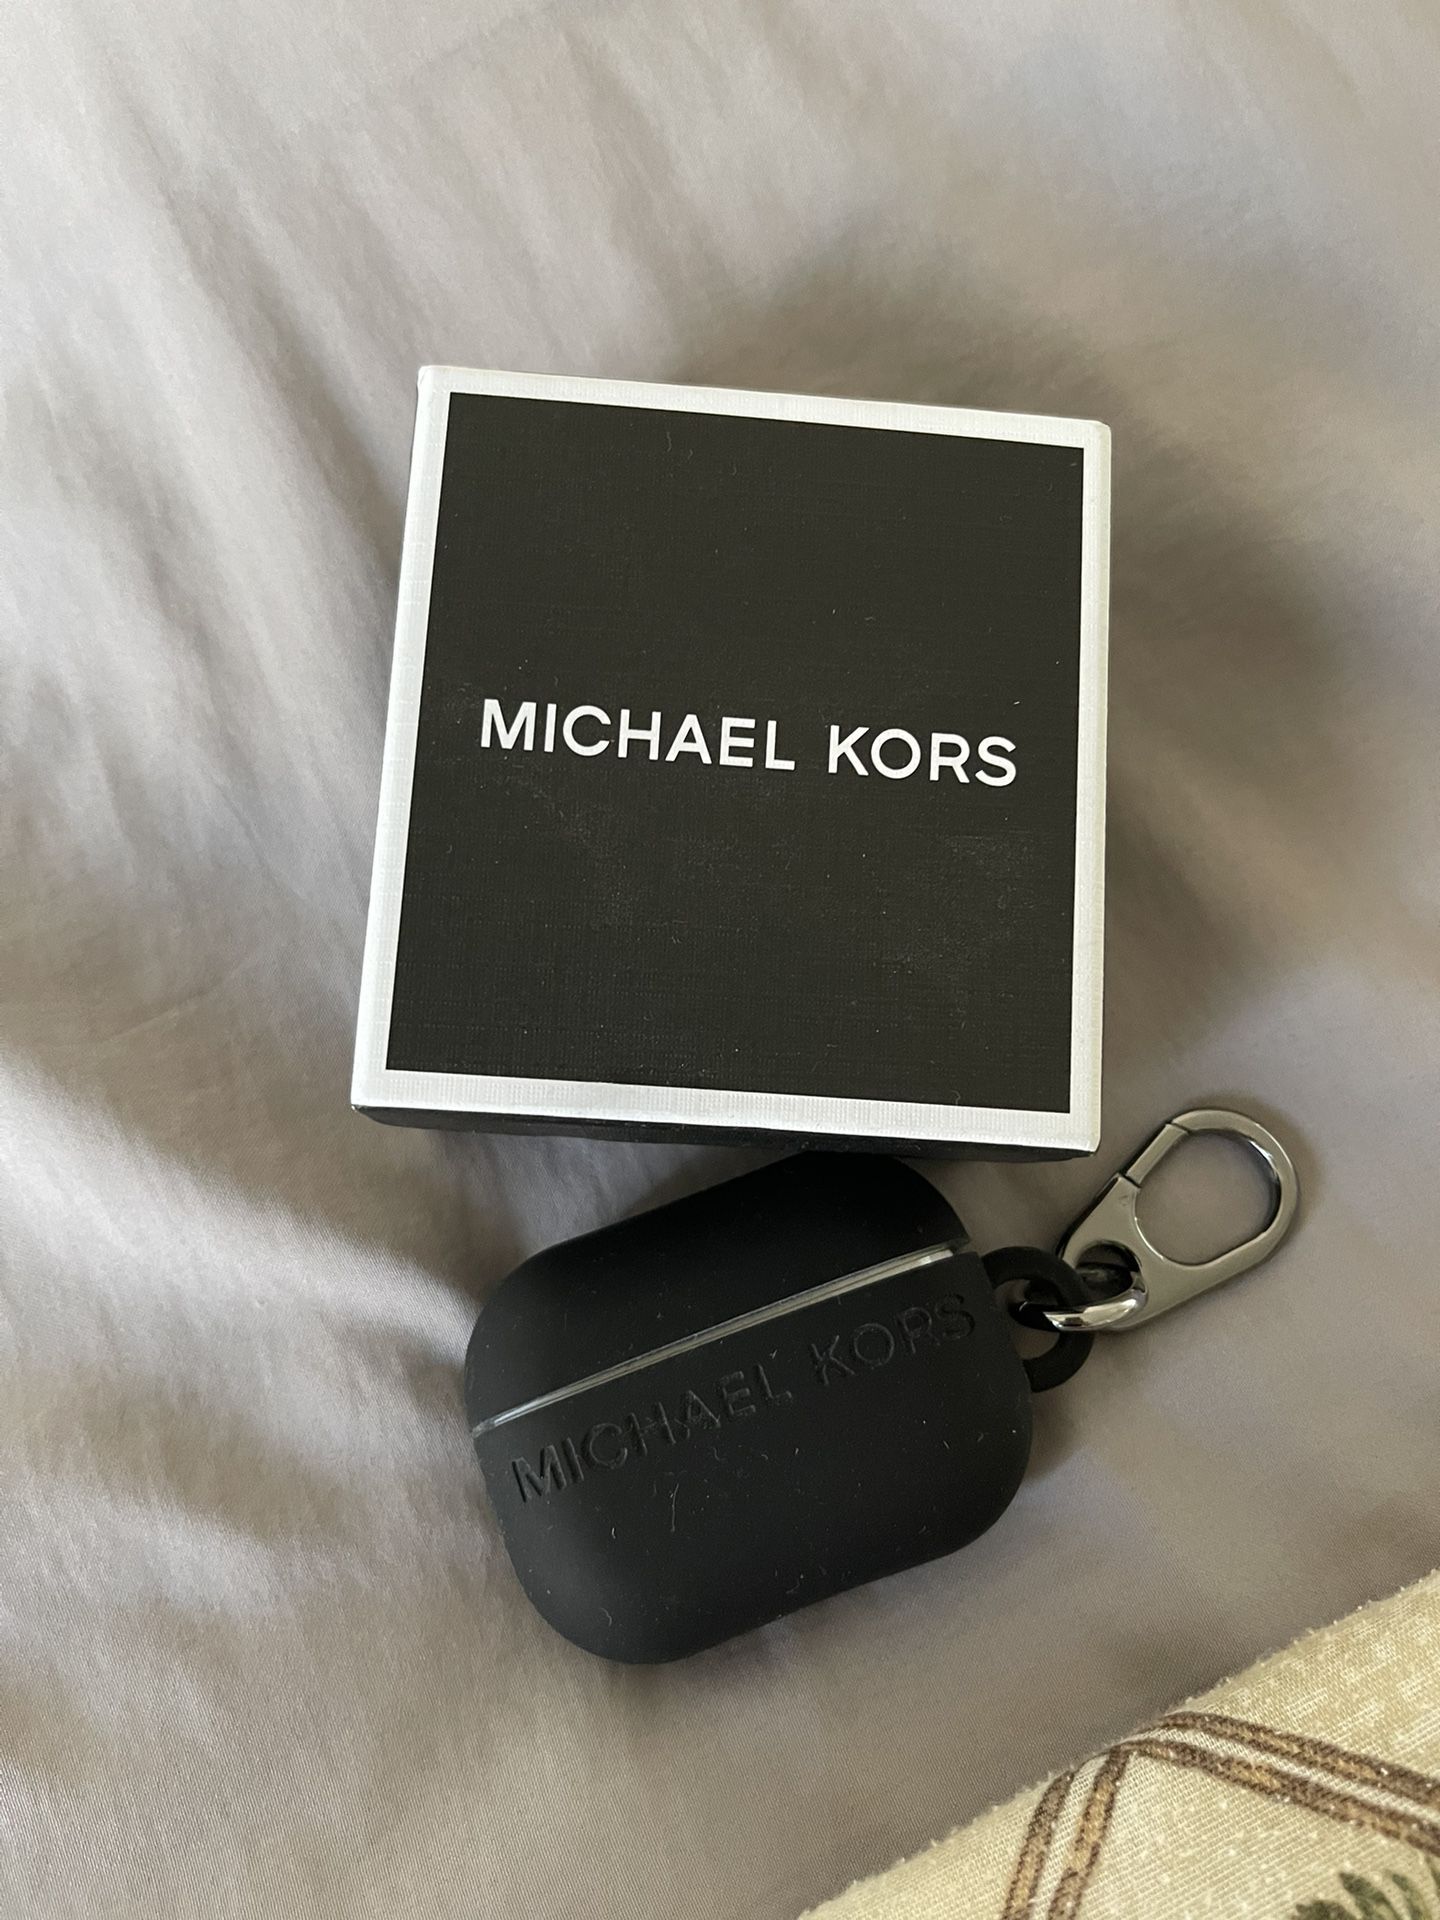 Michael Kors Air Pod Case 